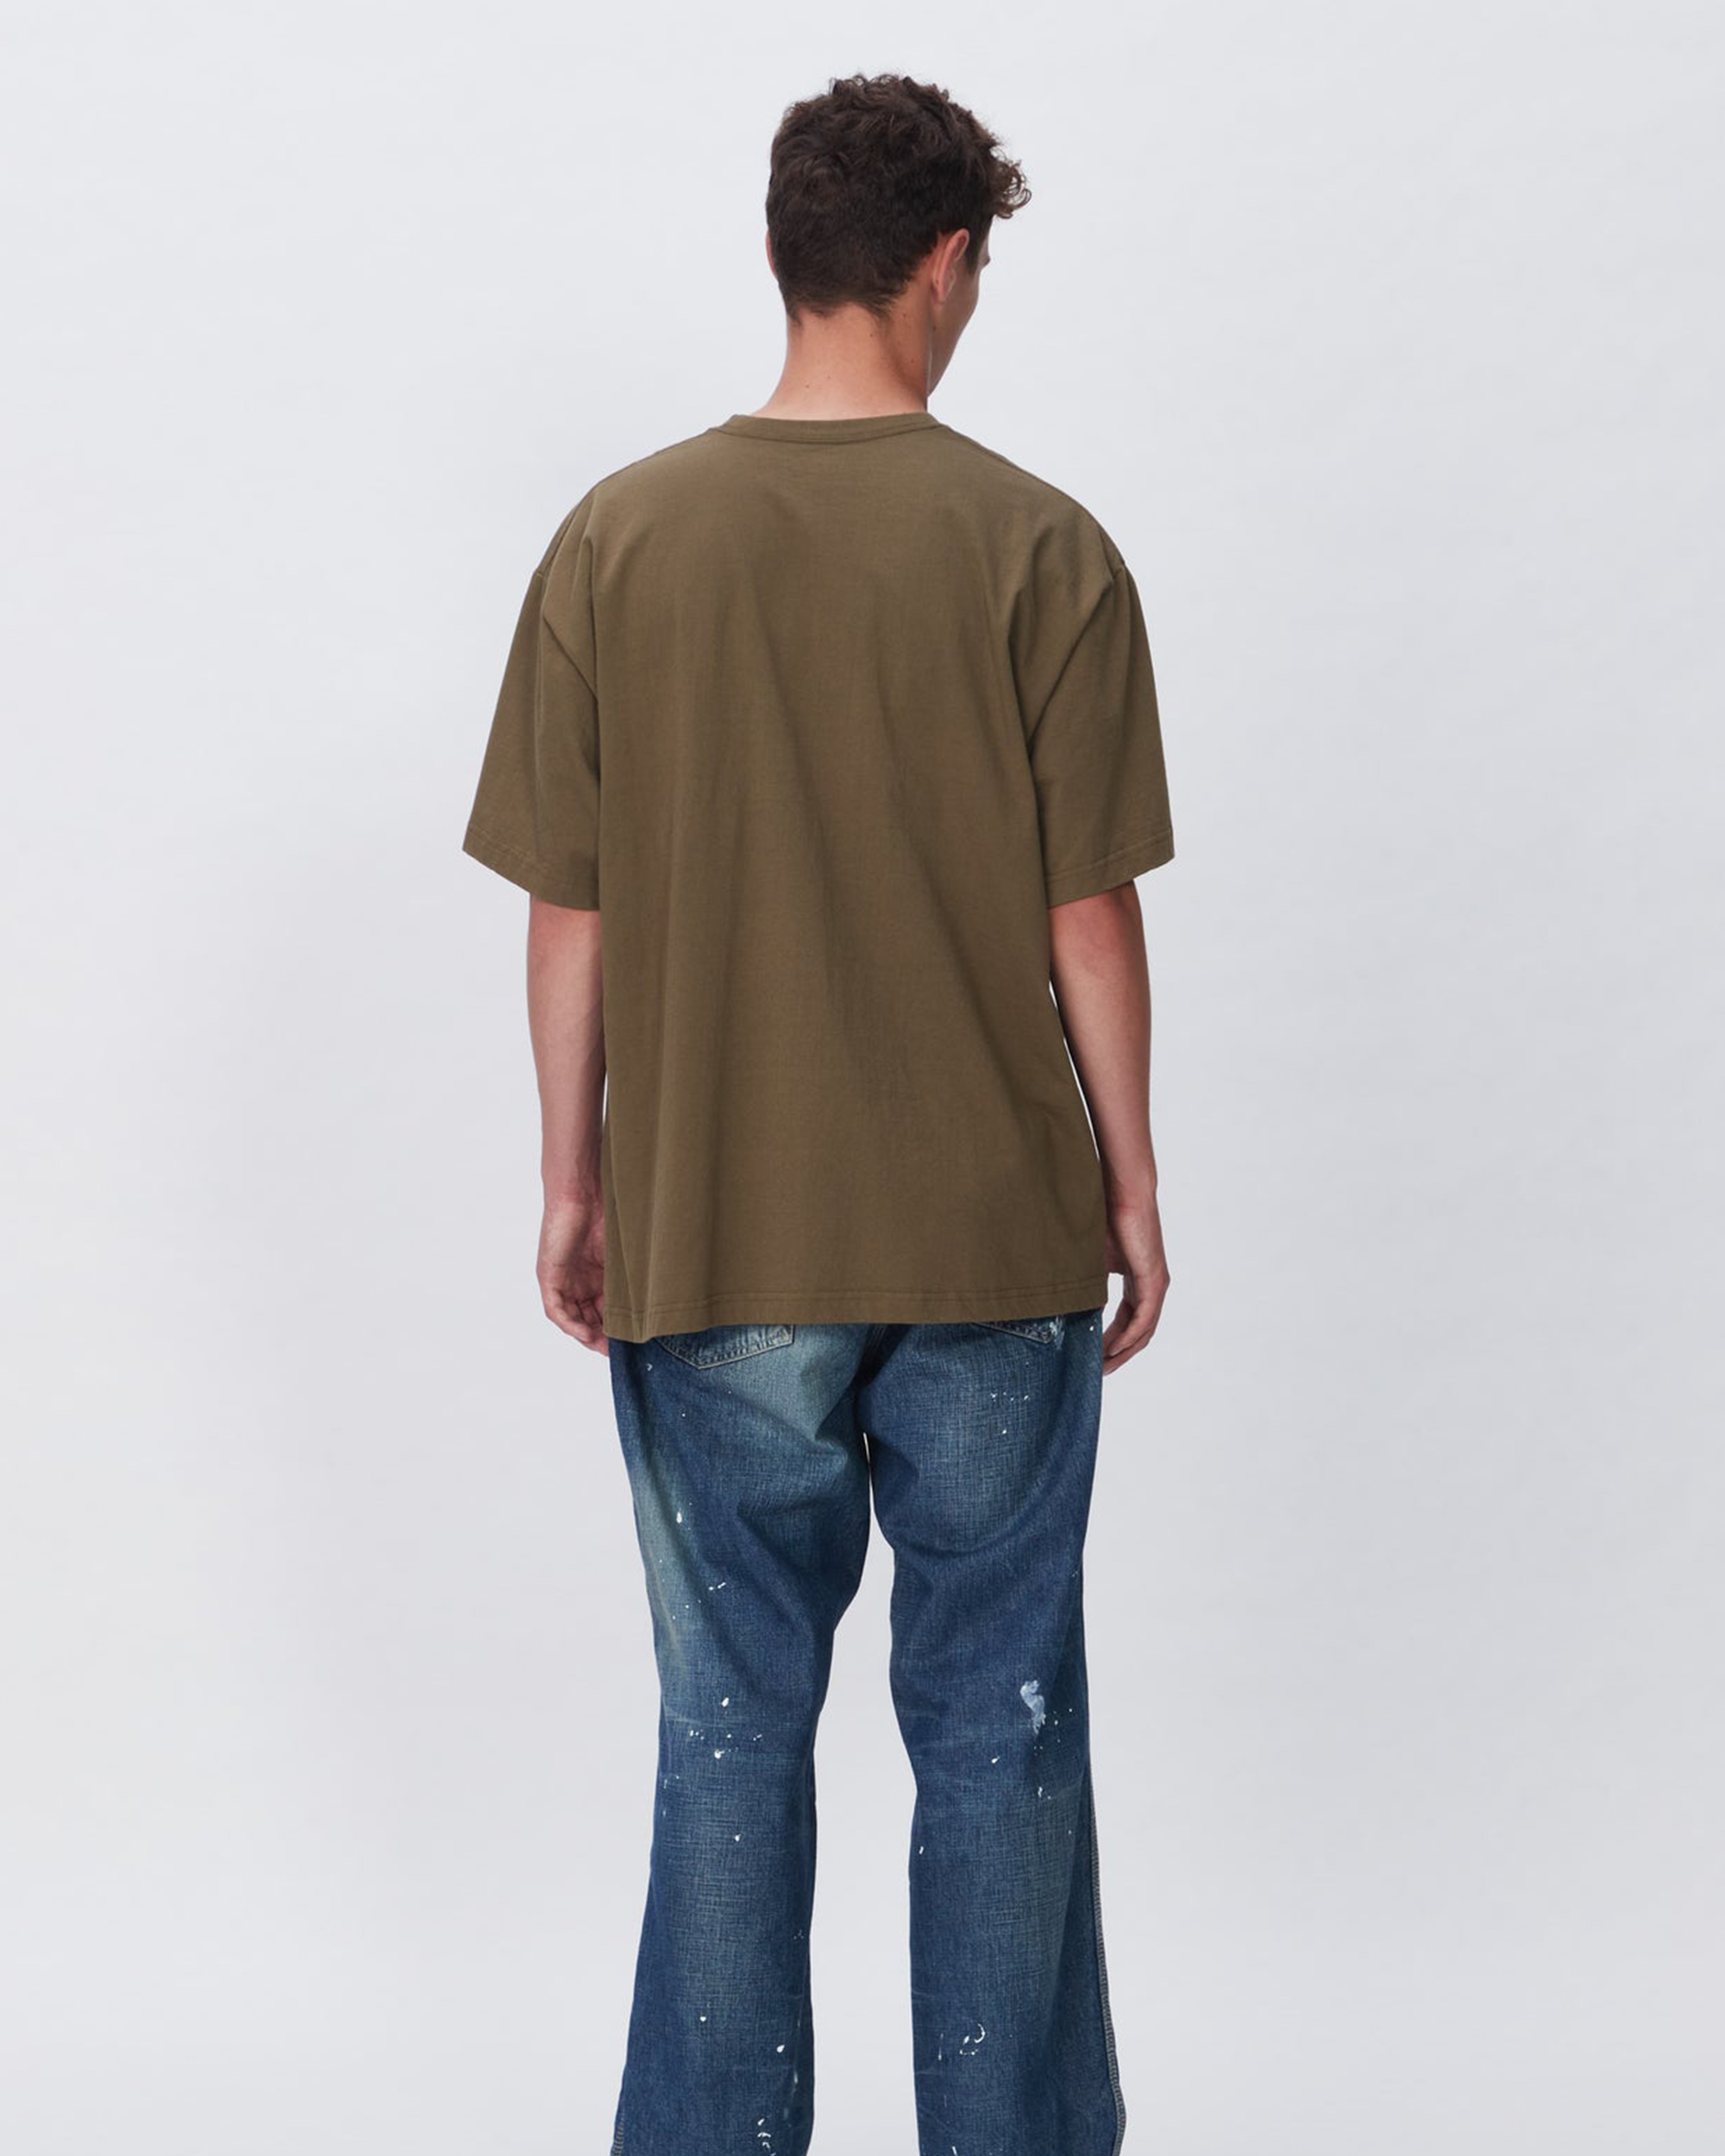 NH 14 T-Shirt - Olive Drab